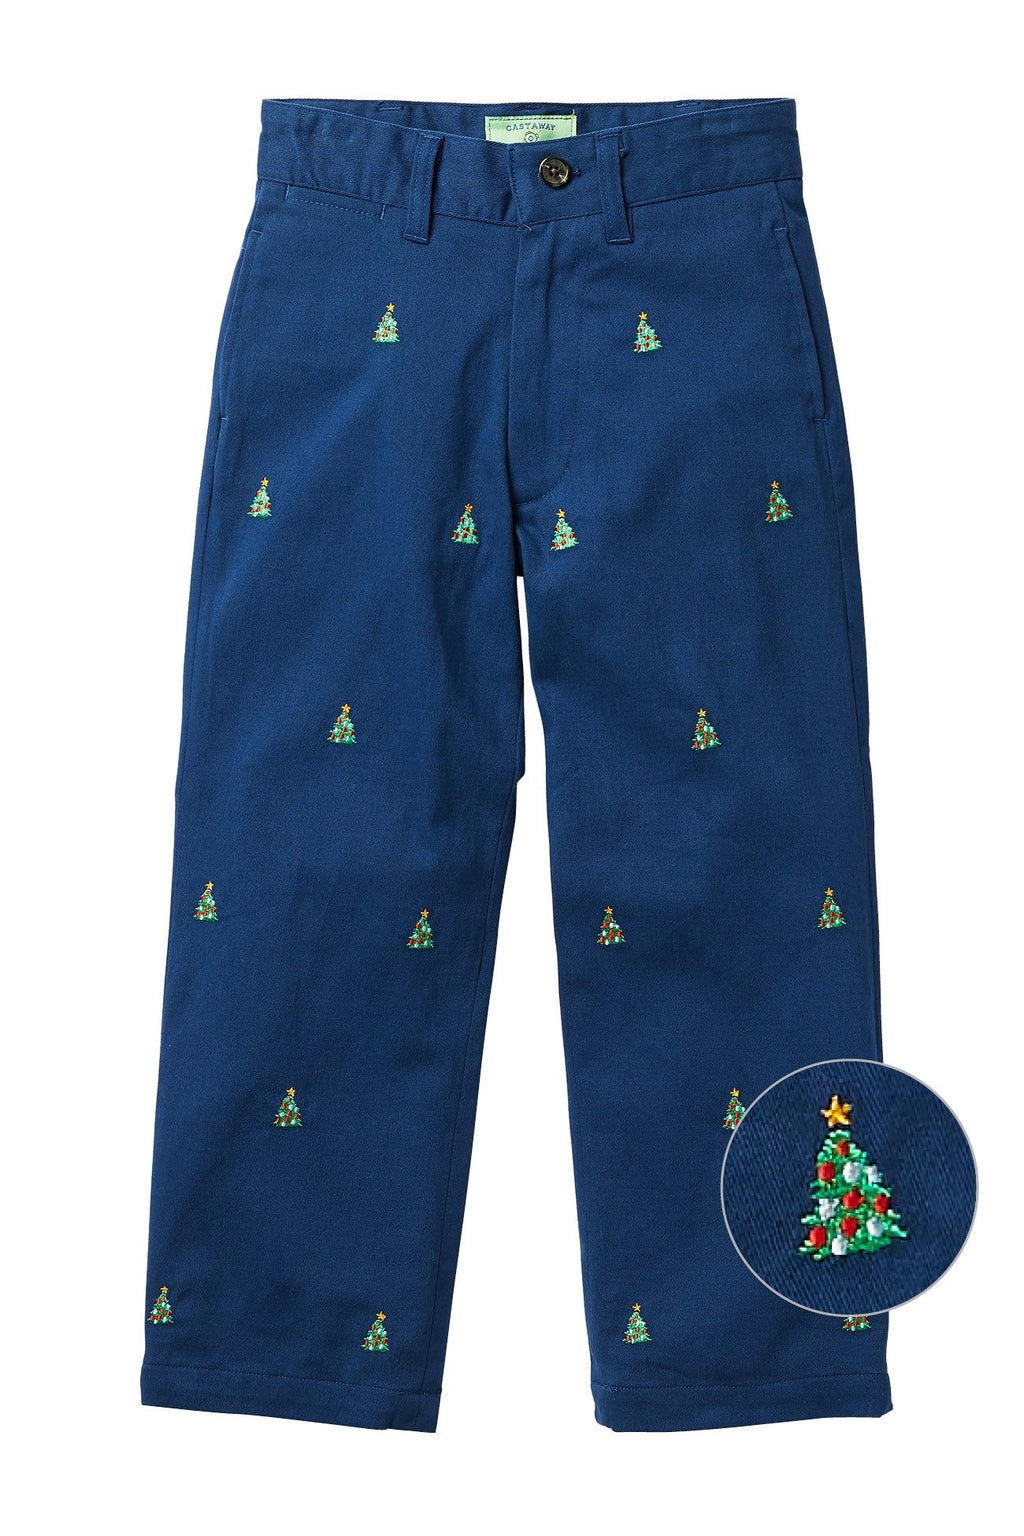 Boys Port Pant Stretch Twill Nantucket Navy with Christmas Tree - Castaway Nantucket Island